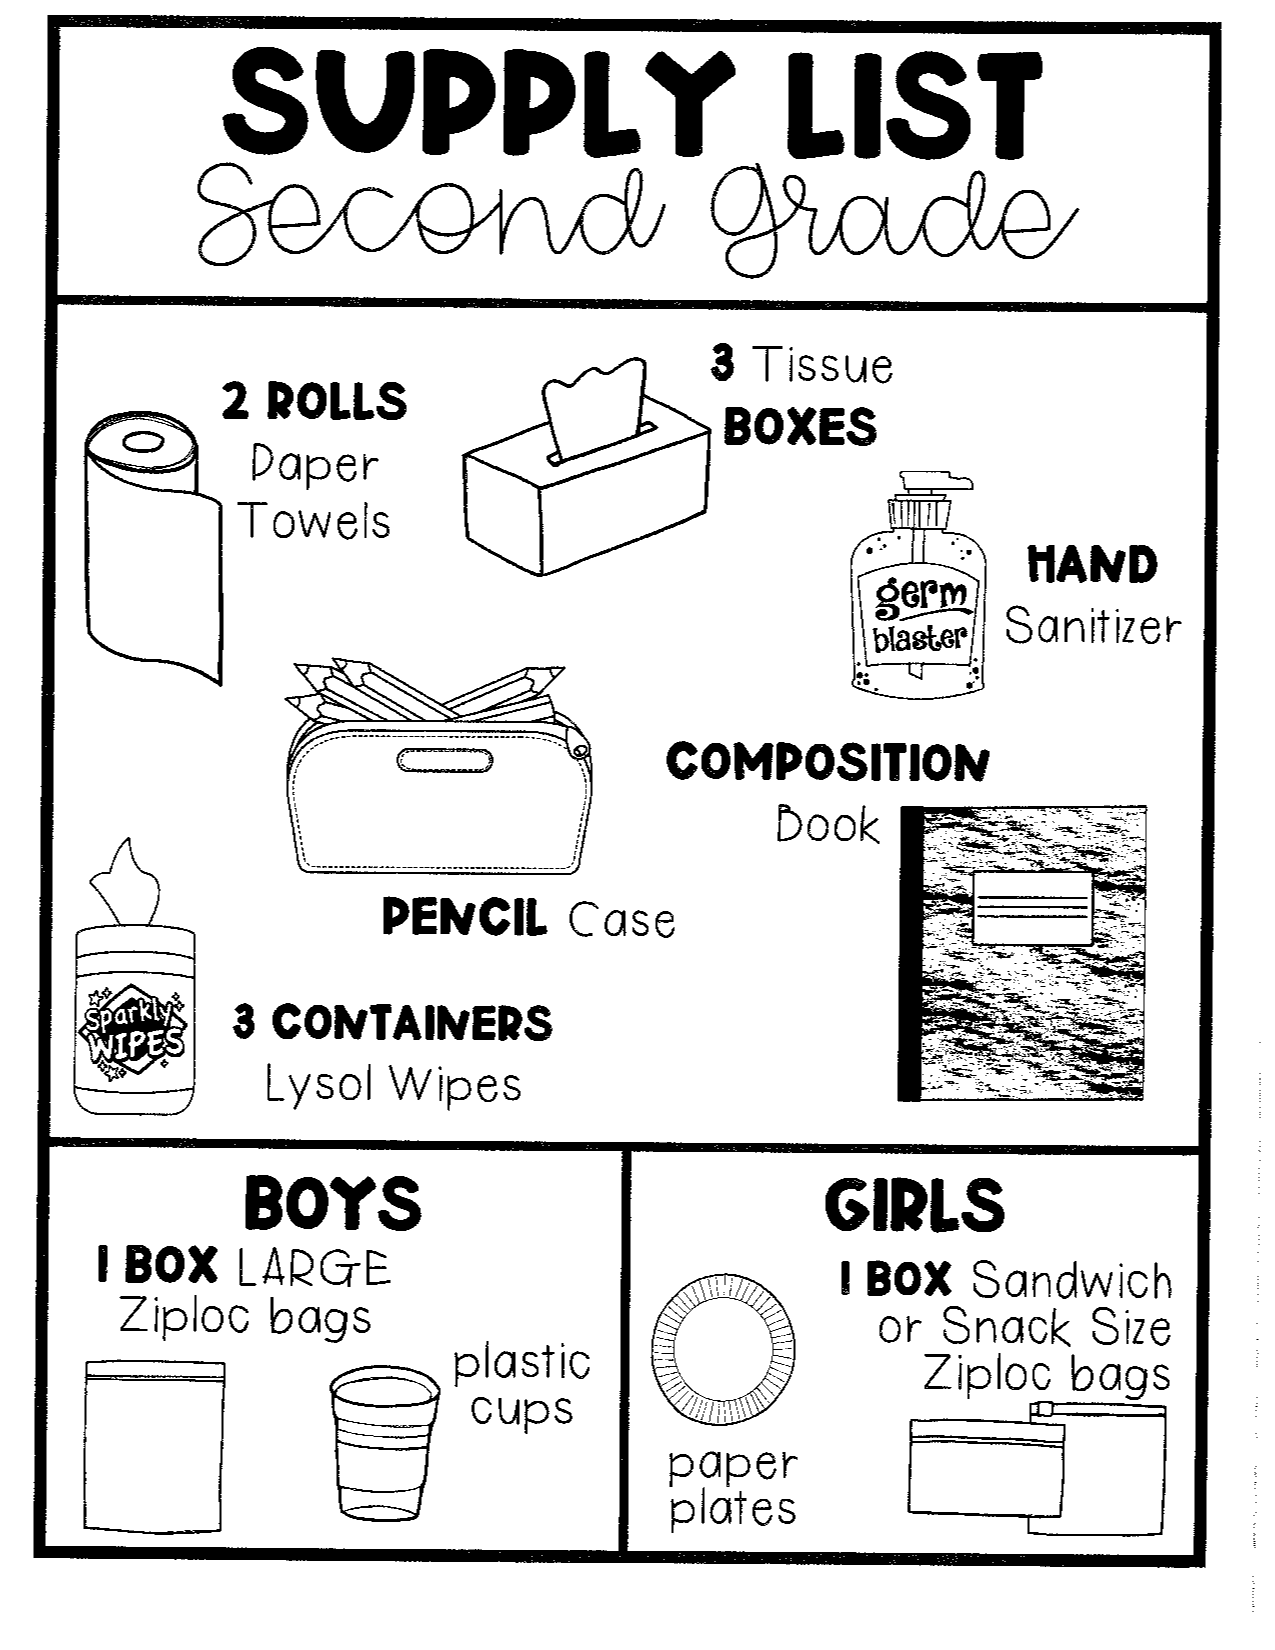 Supply Lists Second Grade